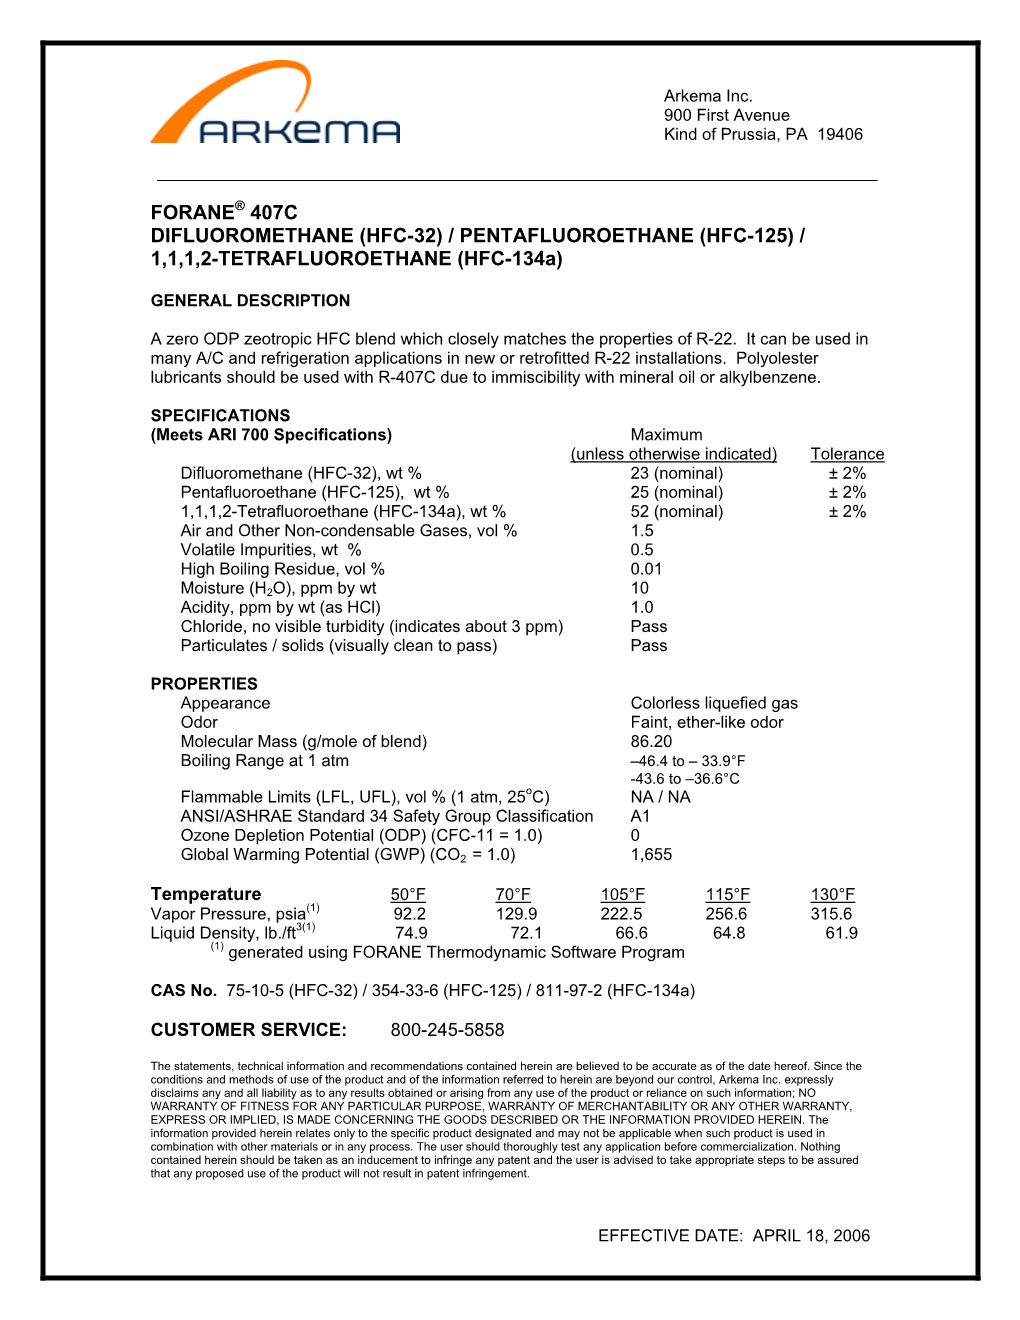 FORANE® 407C DIFLUOROMETHANE (HFC-32) / PENTAFLUOROETHANE (HFC-125) / 1,1,1,2-TETRAFLUOROETHANE (HFC-134A)